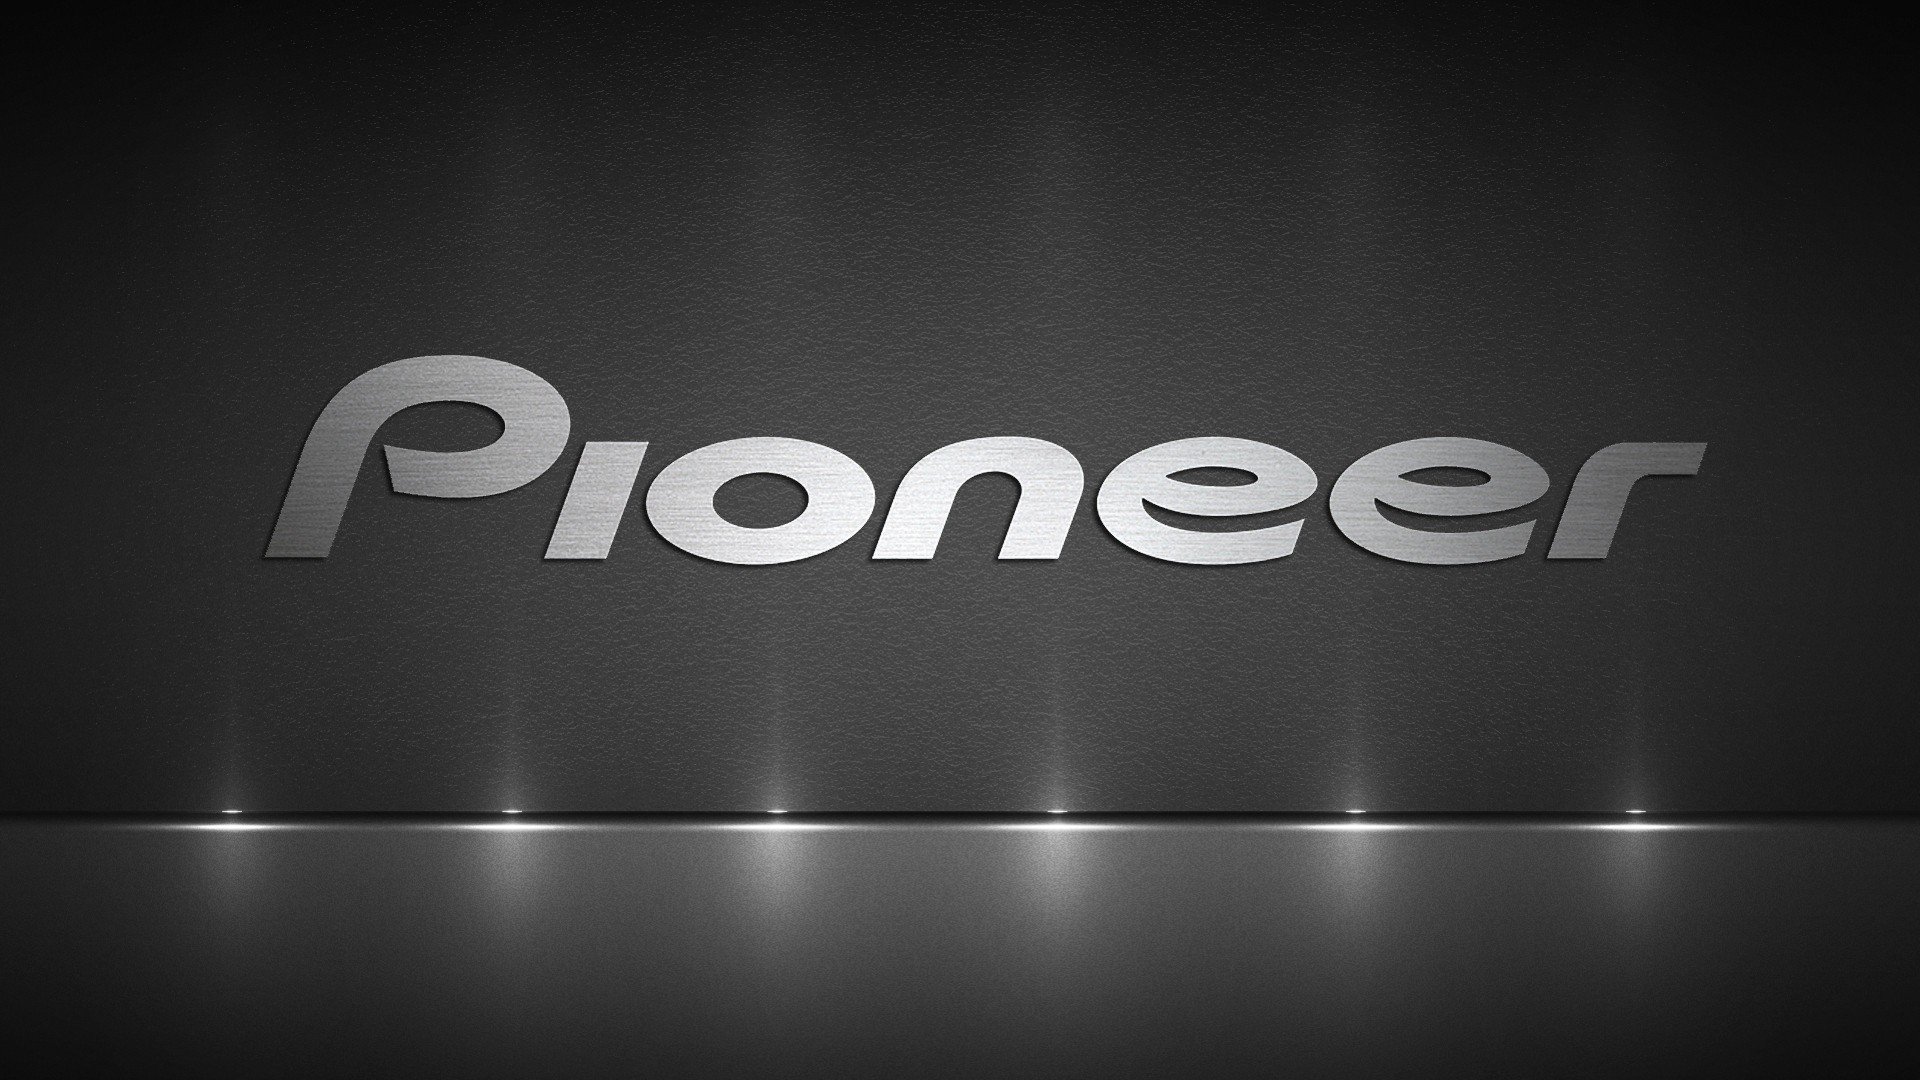 monochrome, Pioneer (logo) Wallpaper